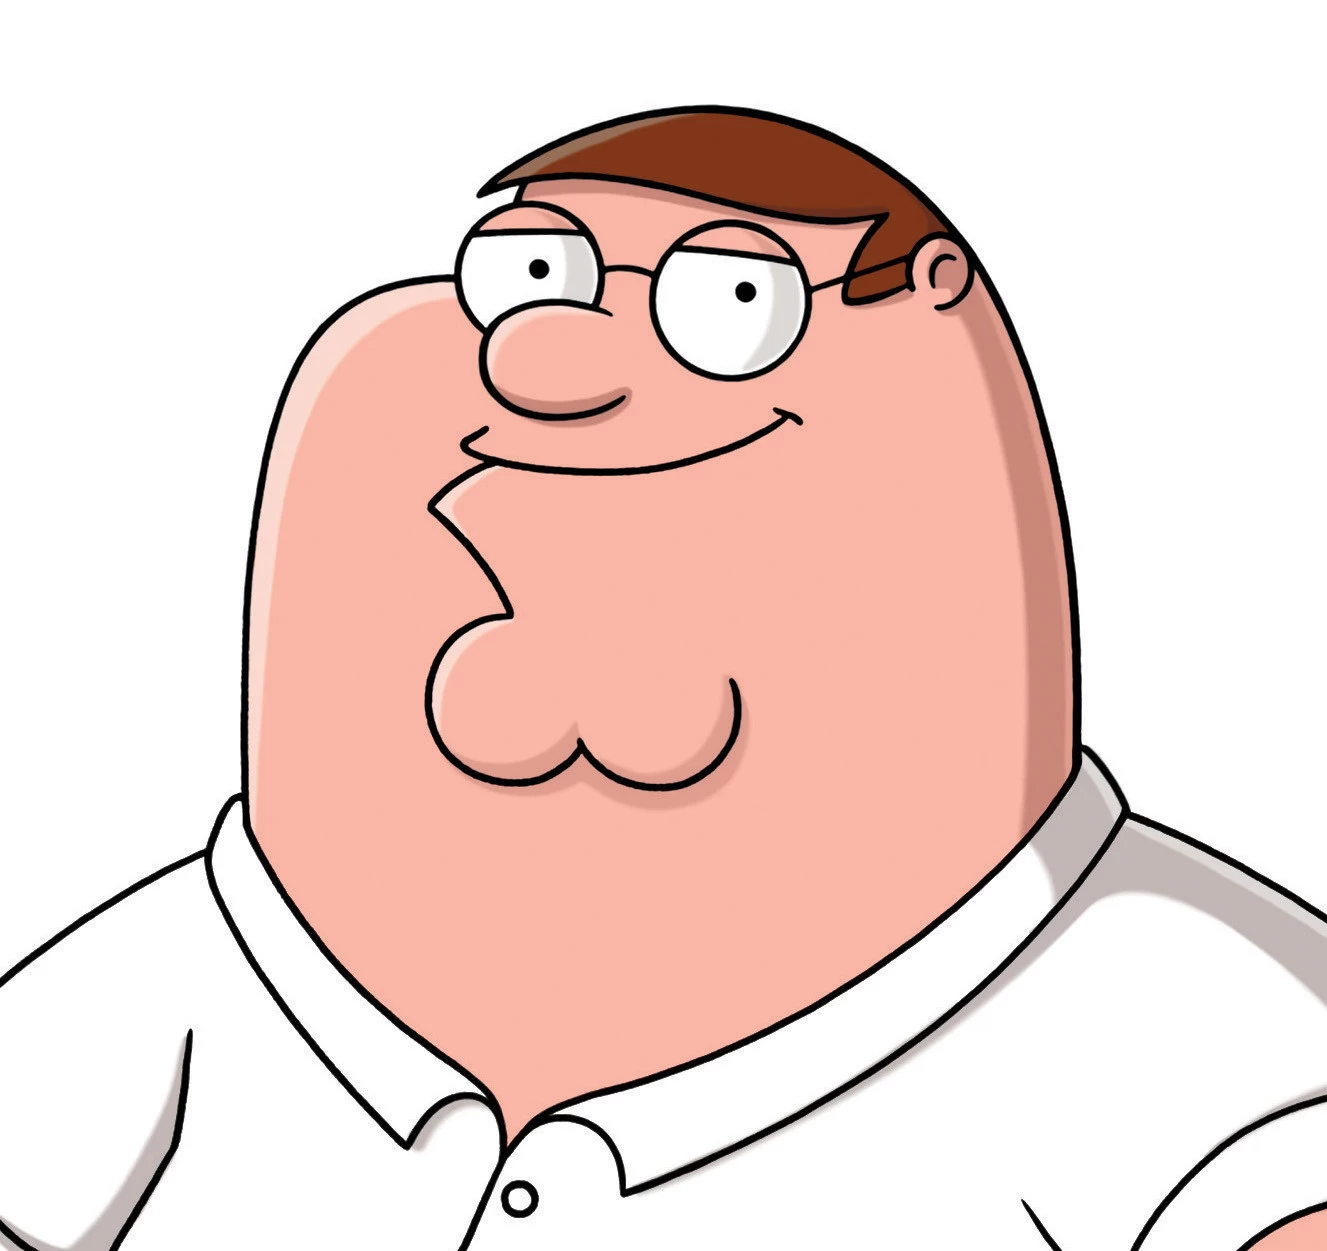 Peter Griffin 3ds Port Super Smash Bros 3ds Requests - peter griffin face r...